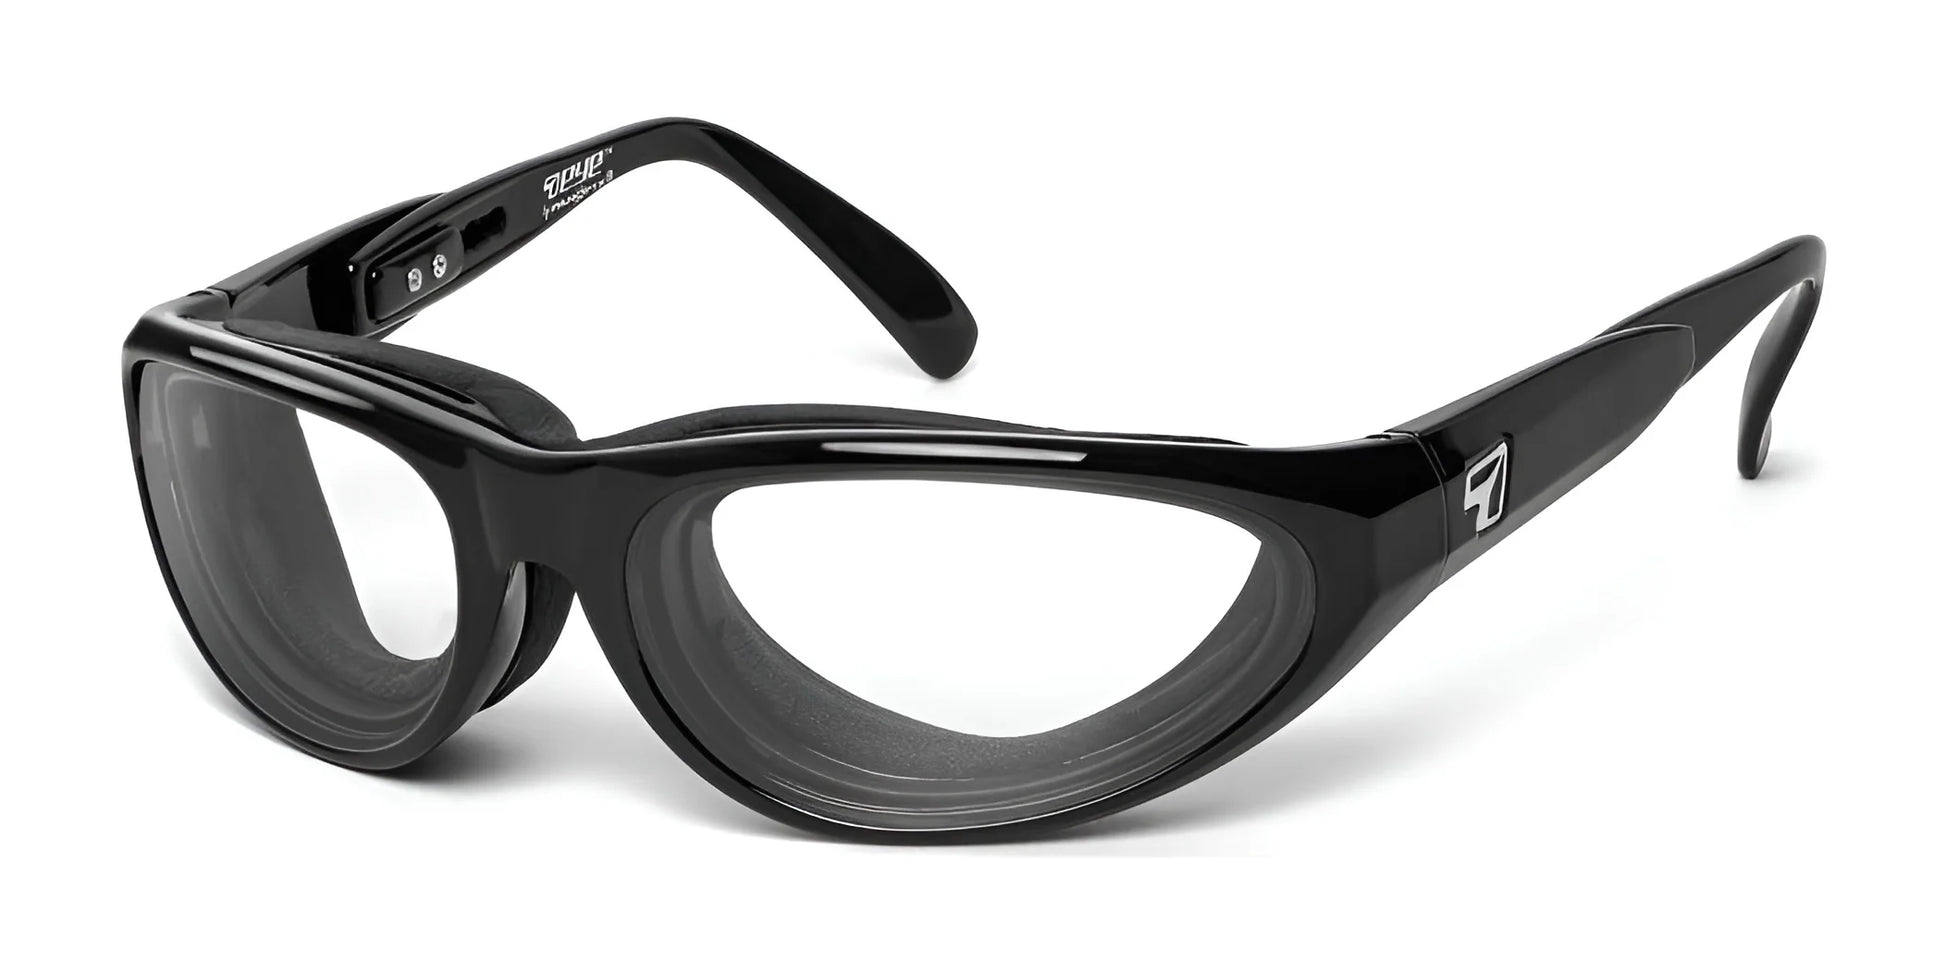 7eye Diablo Sunglasses Glossy Black / BlueByrd Blue Light Blocker